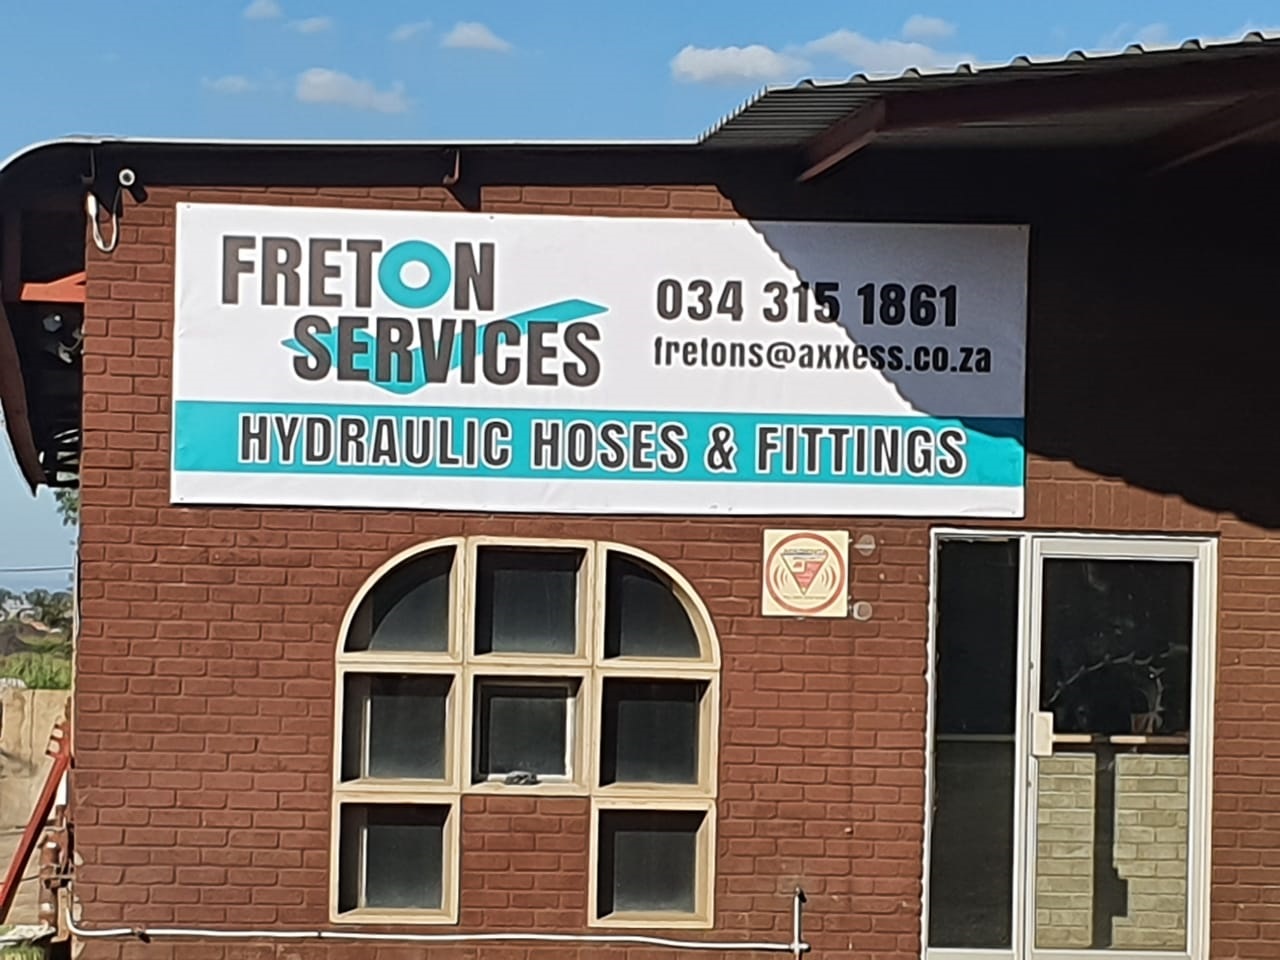 Freton Services Hydraulic Hoses & Fittings